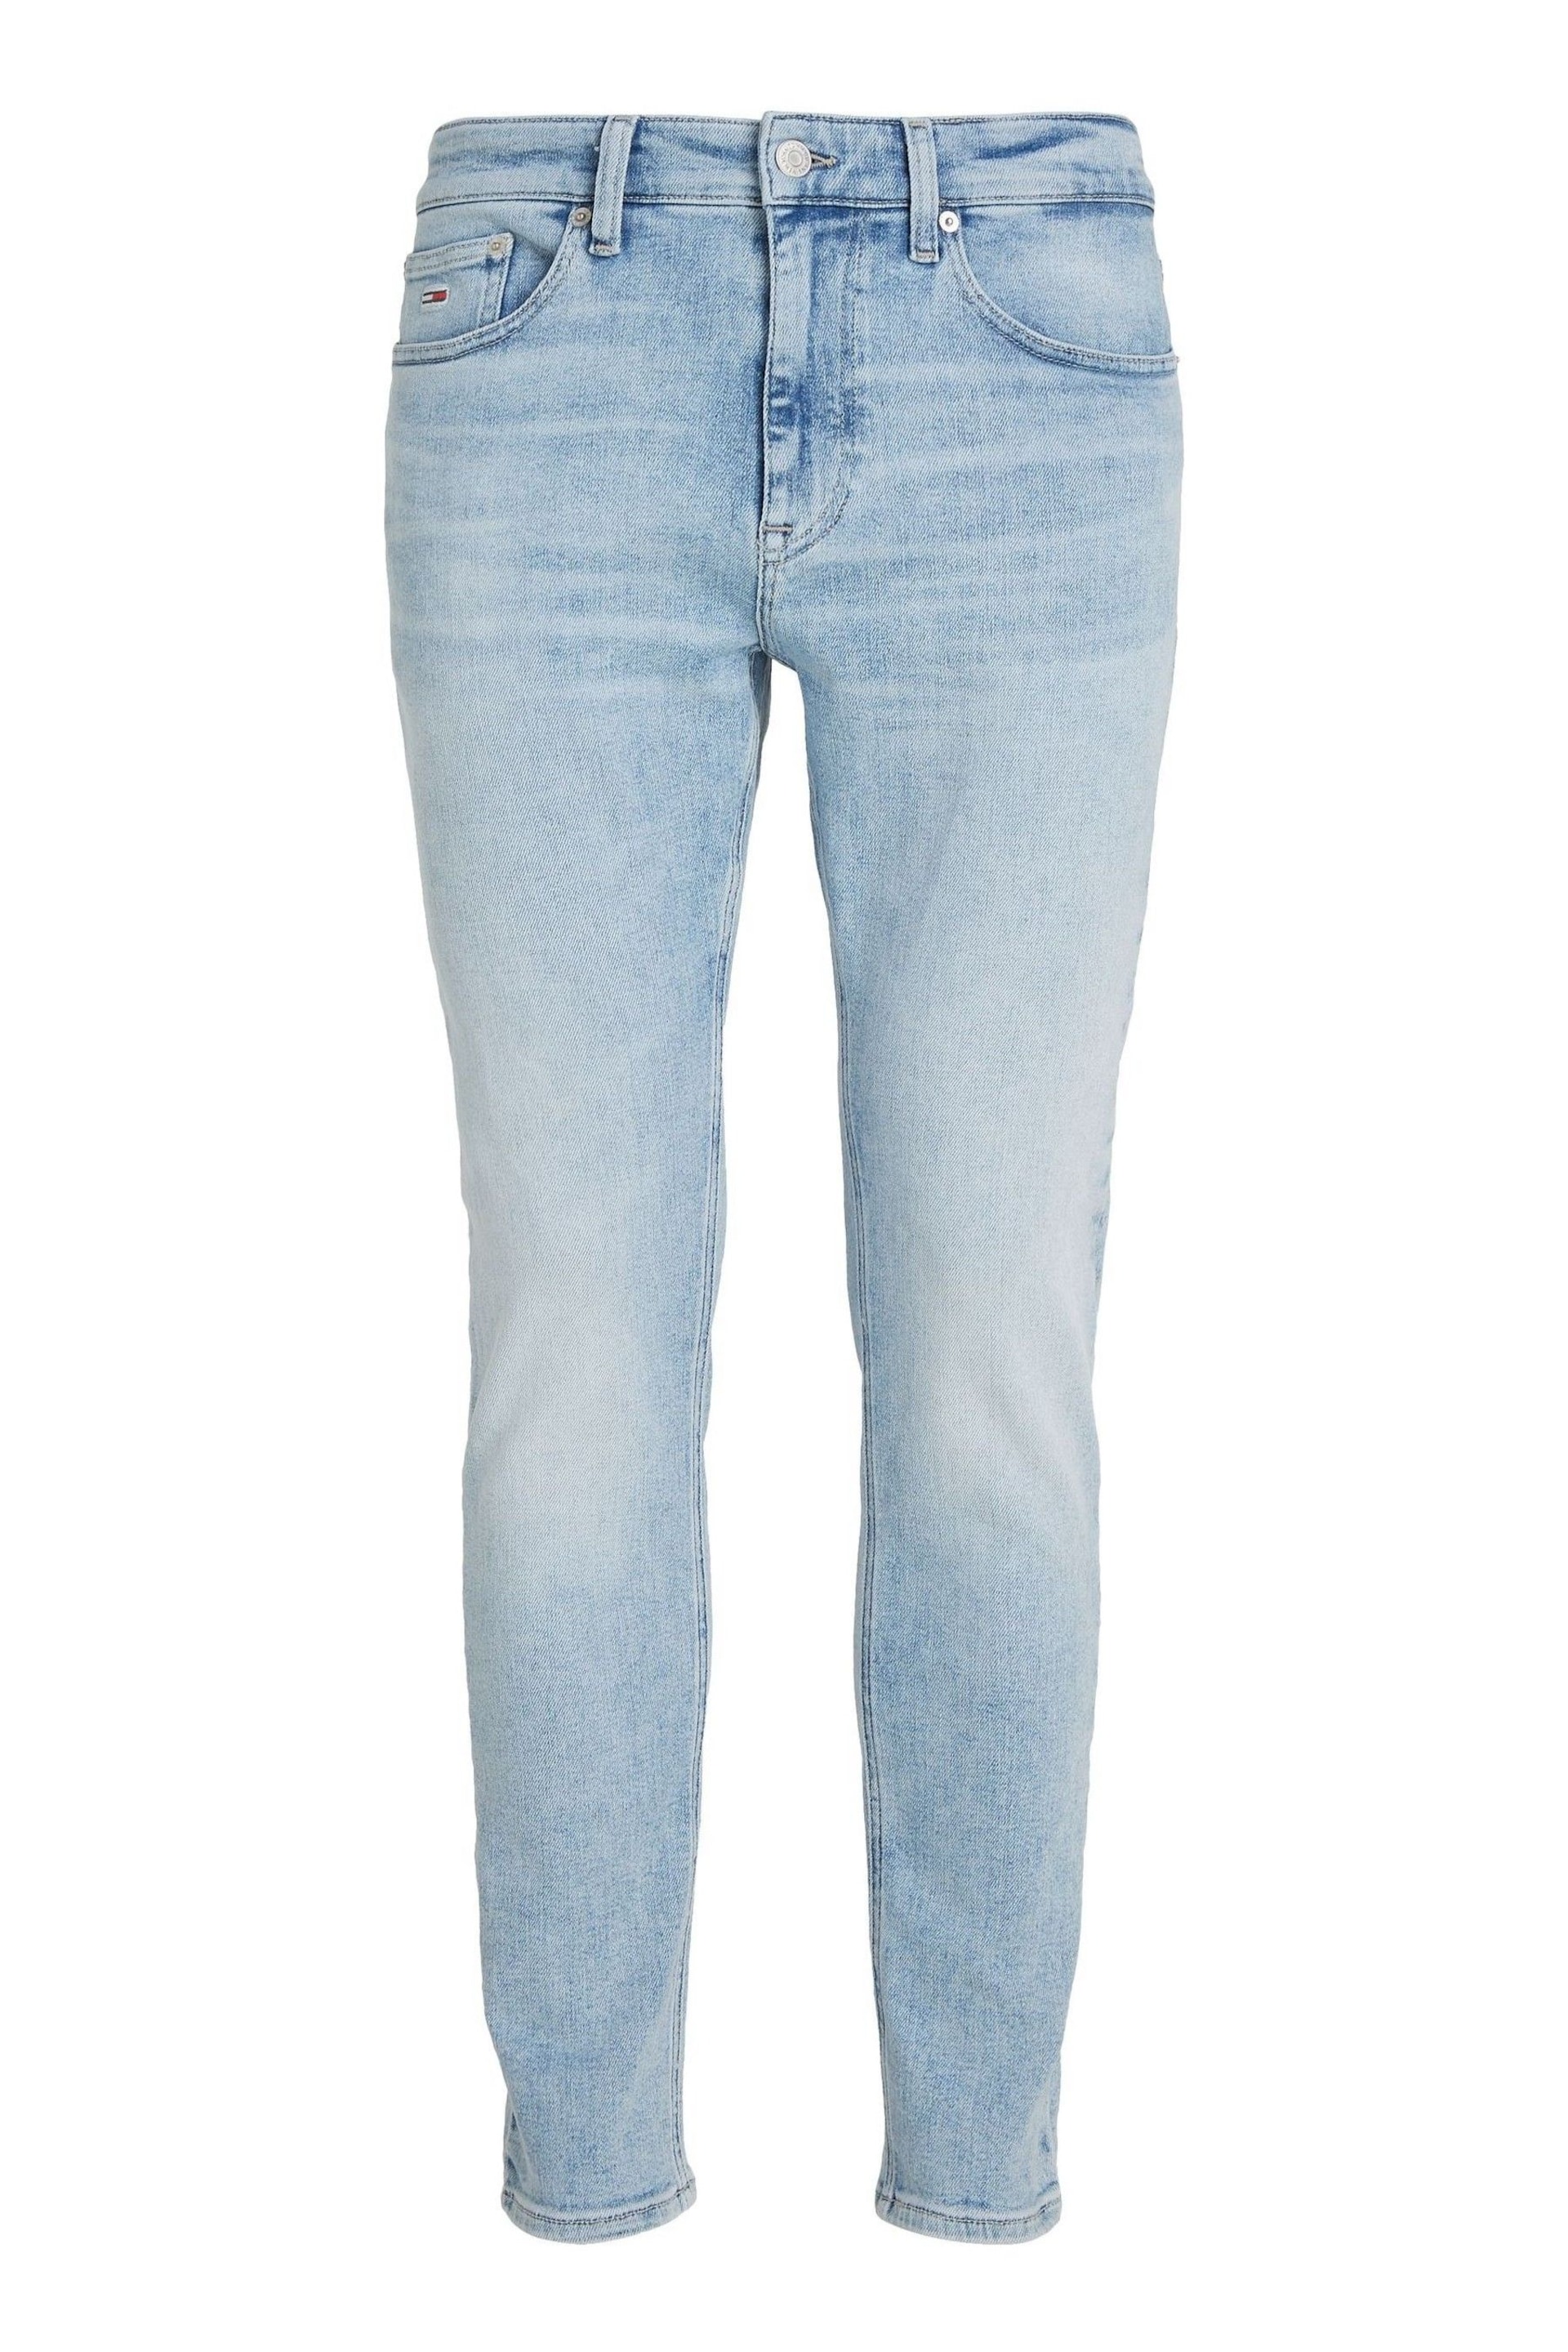 Tommy Jeans Blue Austin Slim Fit Jeans - Image 4 of 6